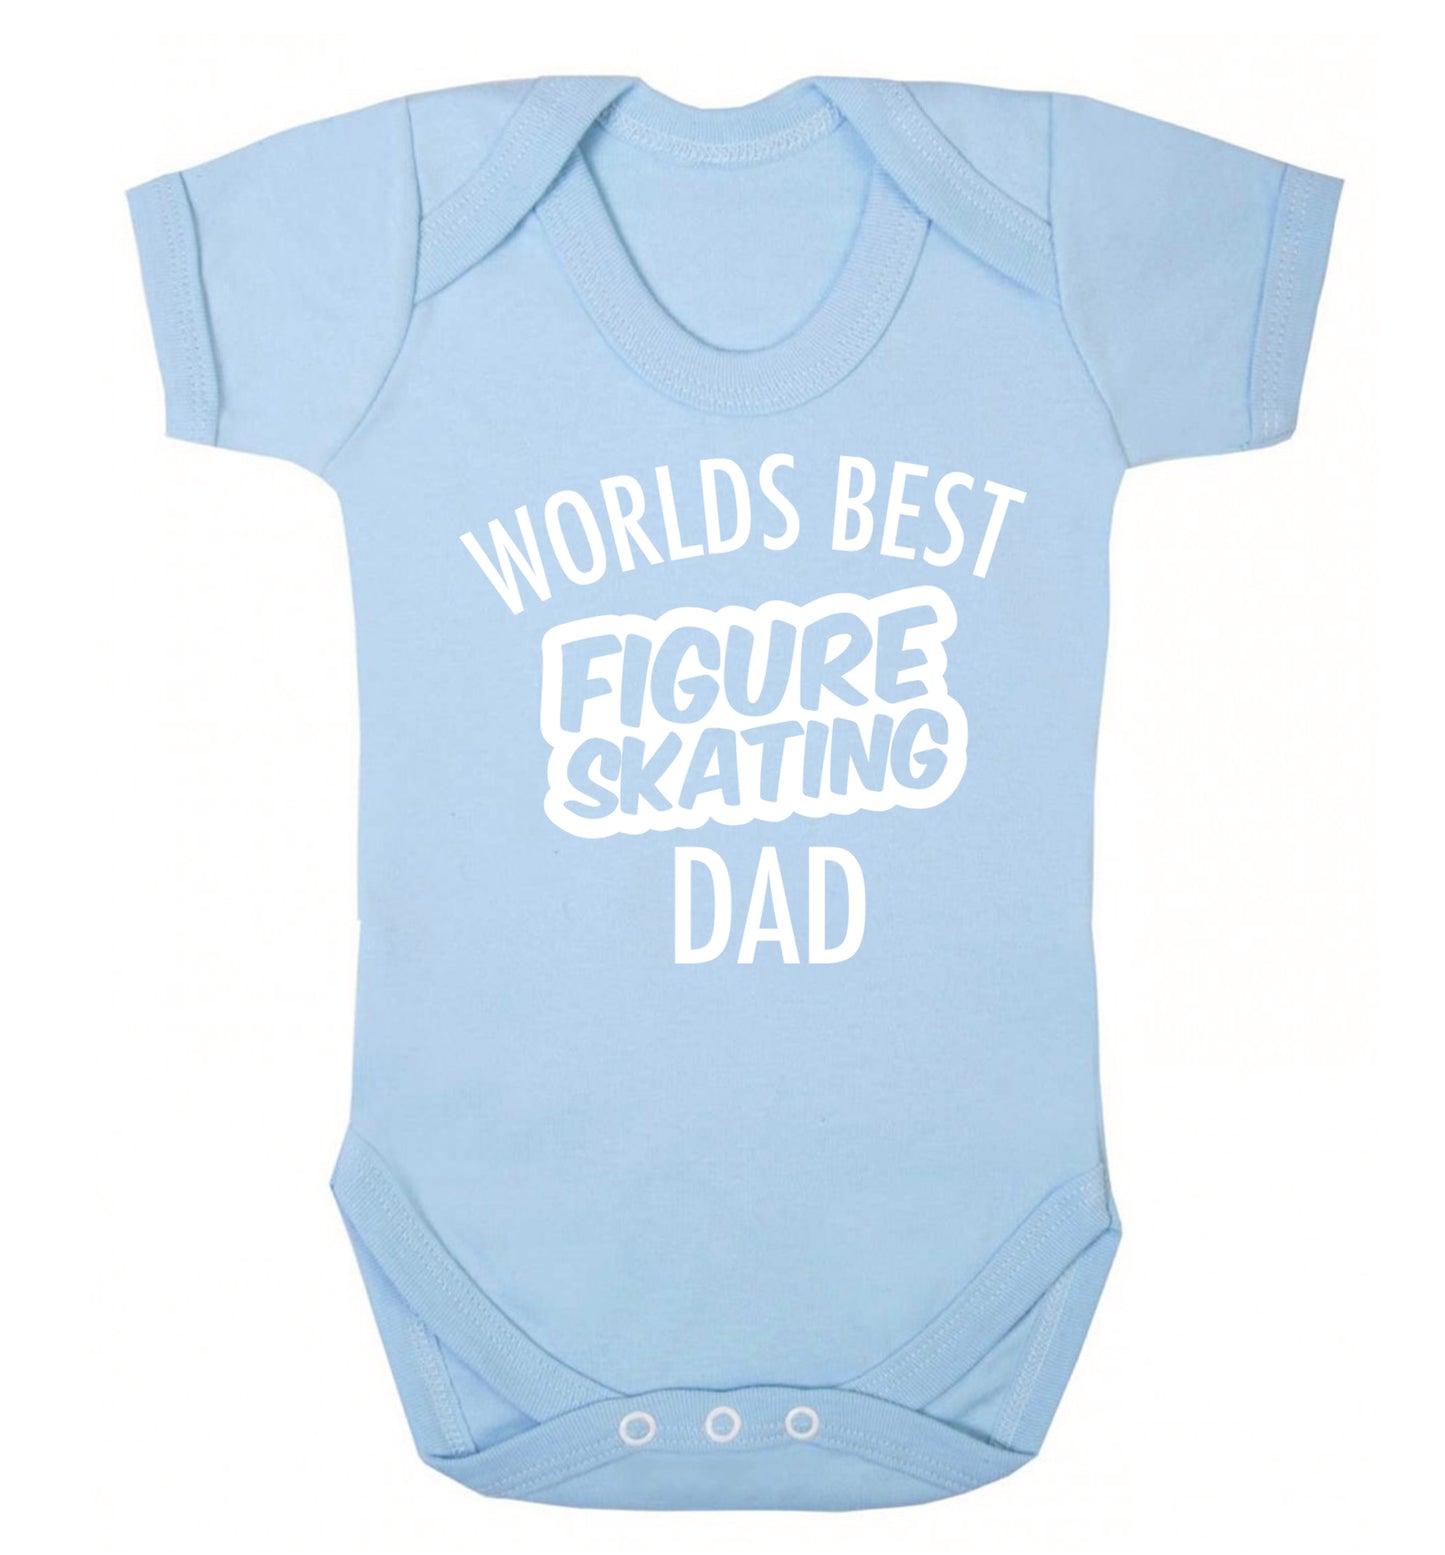 Worlds best figure skating dad Baby Vest pale blue 18-24 months